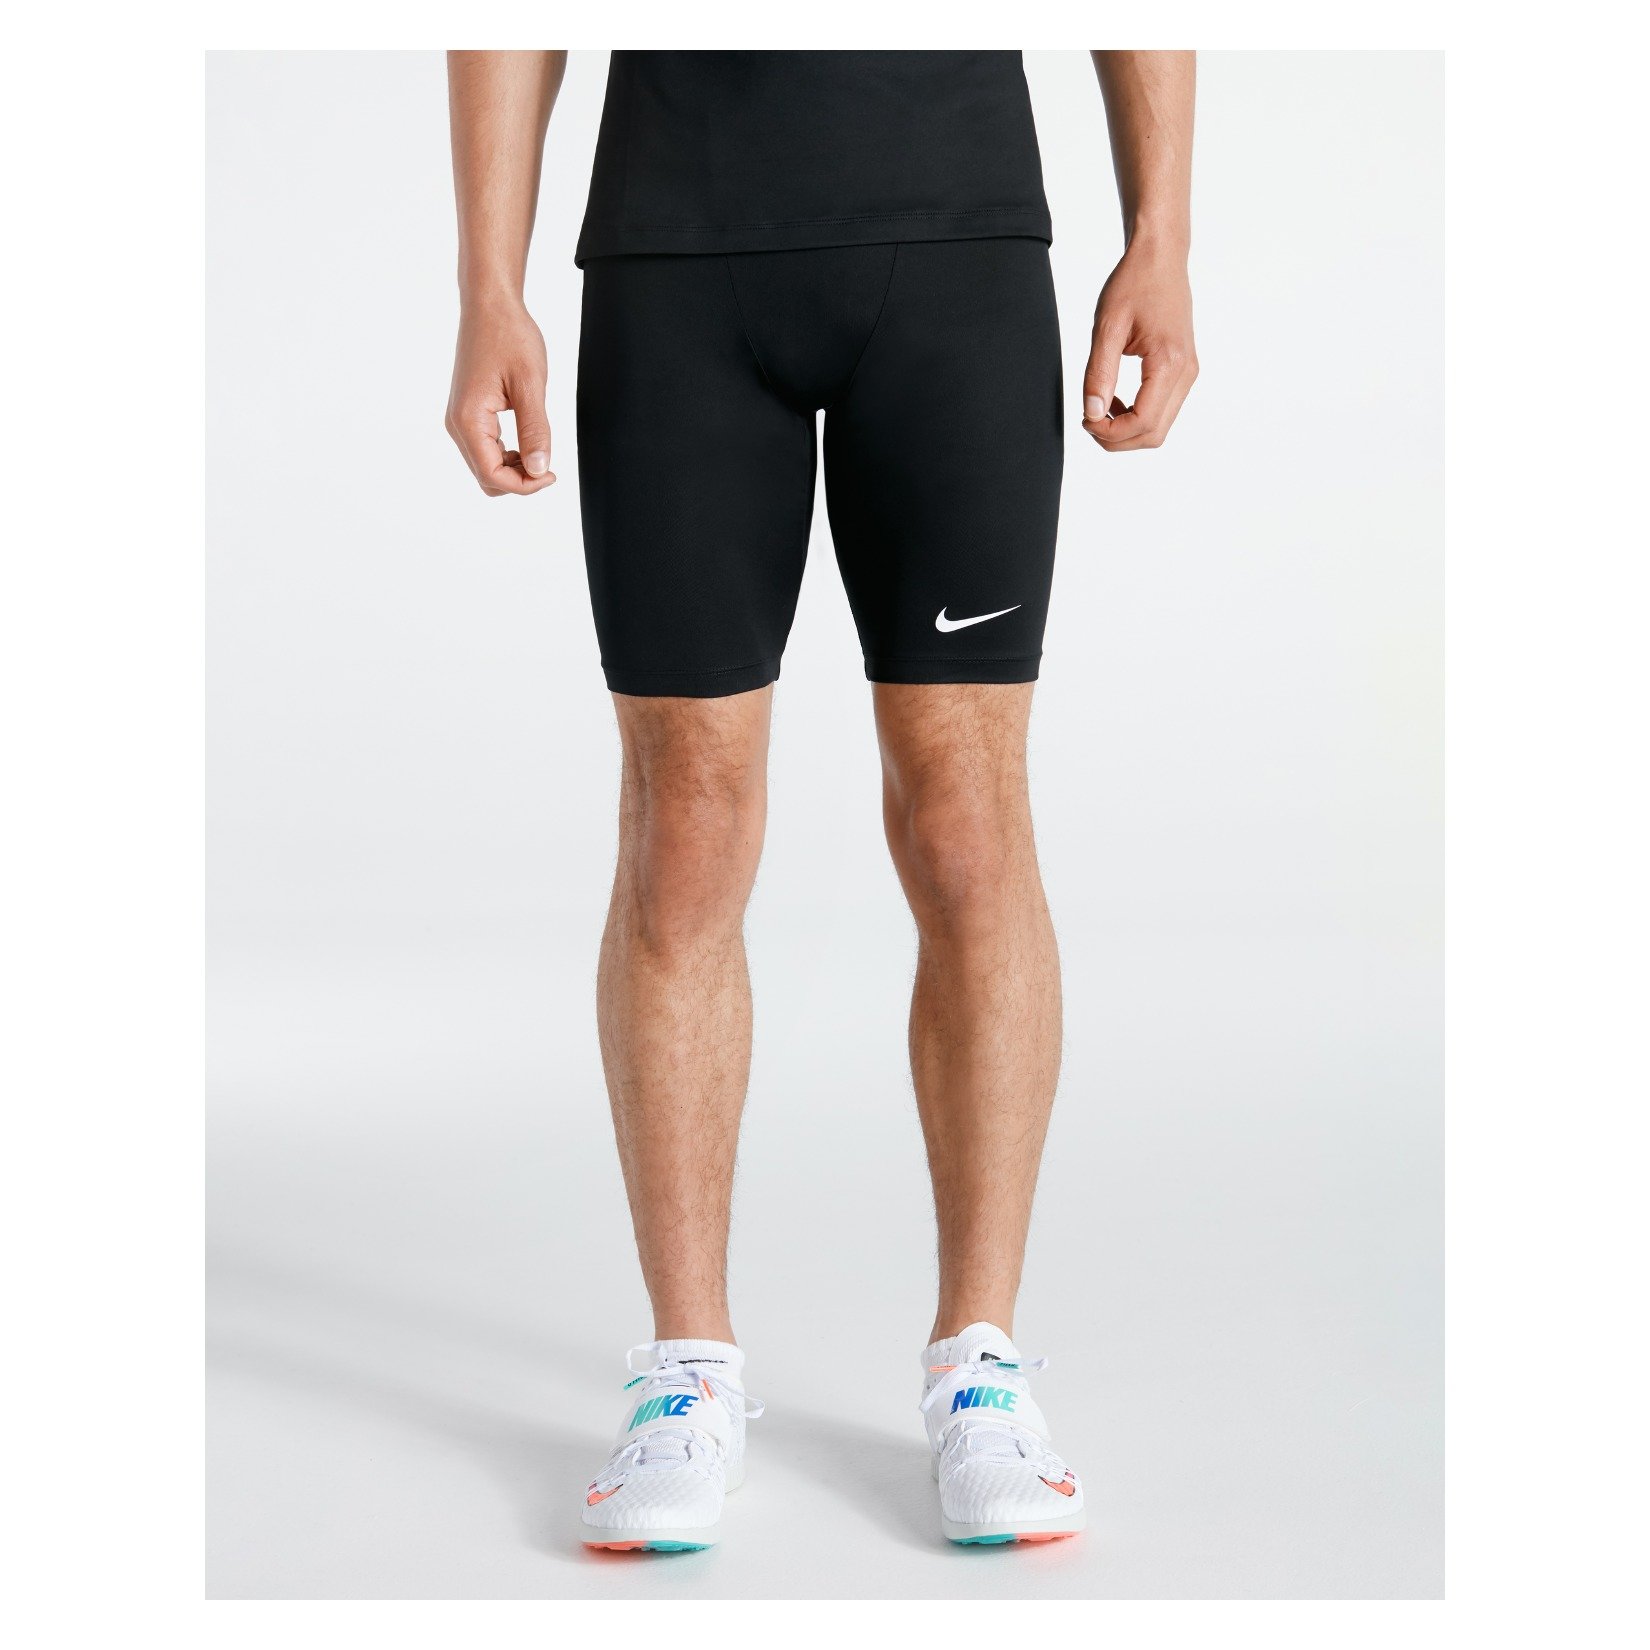 Nike Pro Dri-FIT Logo Men's Tennis Short Tights - Iron Grey/Black